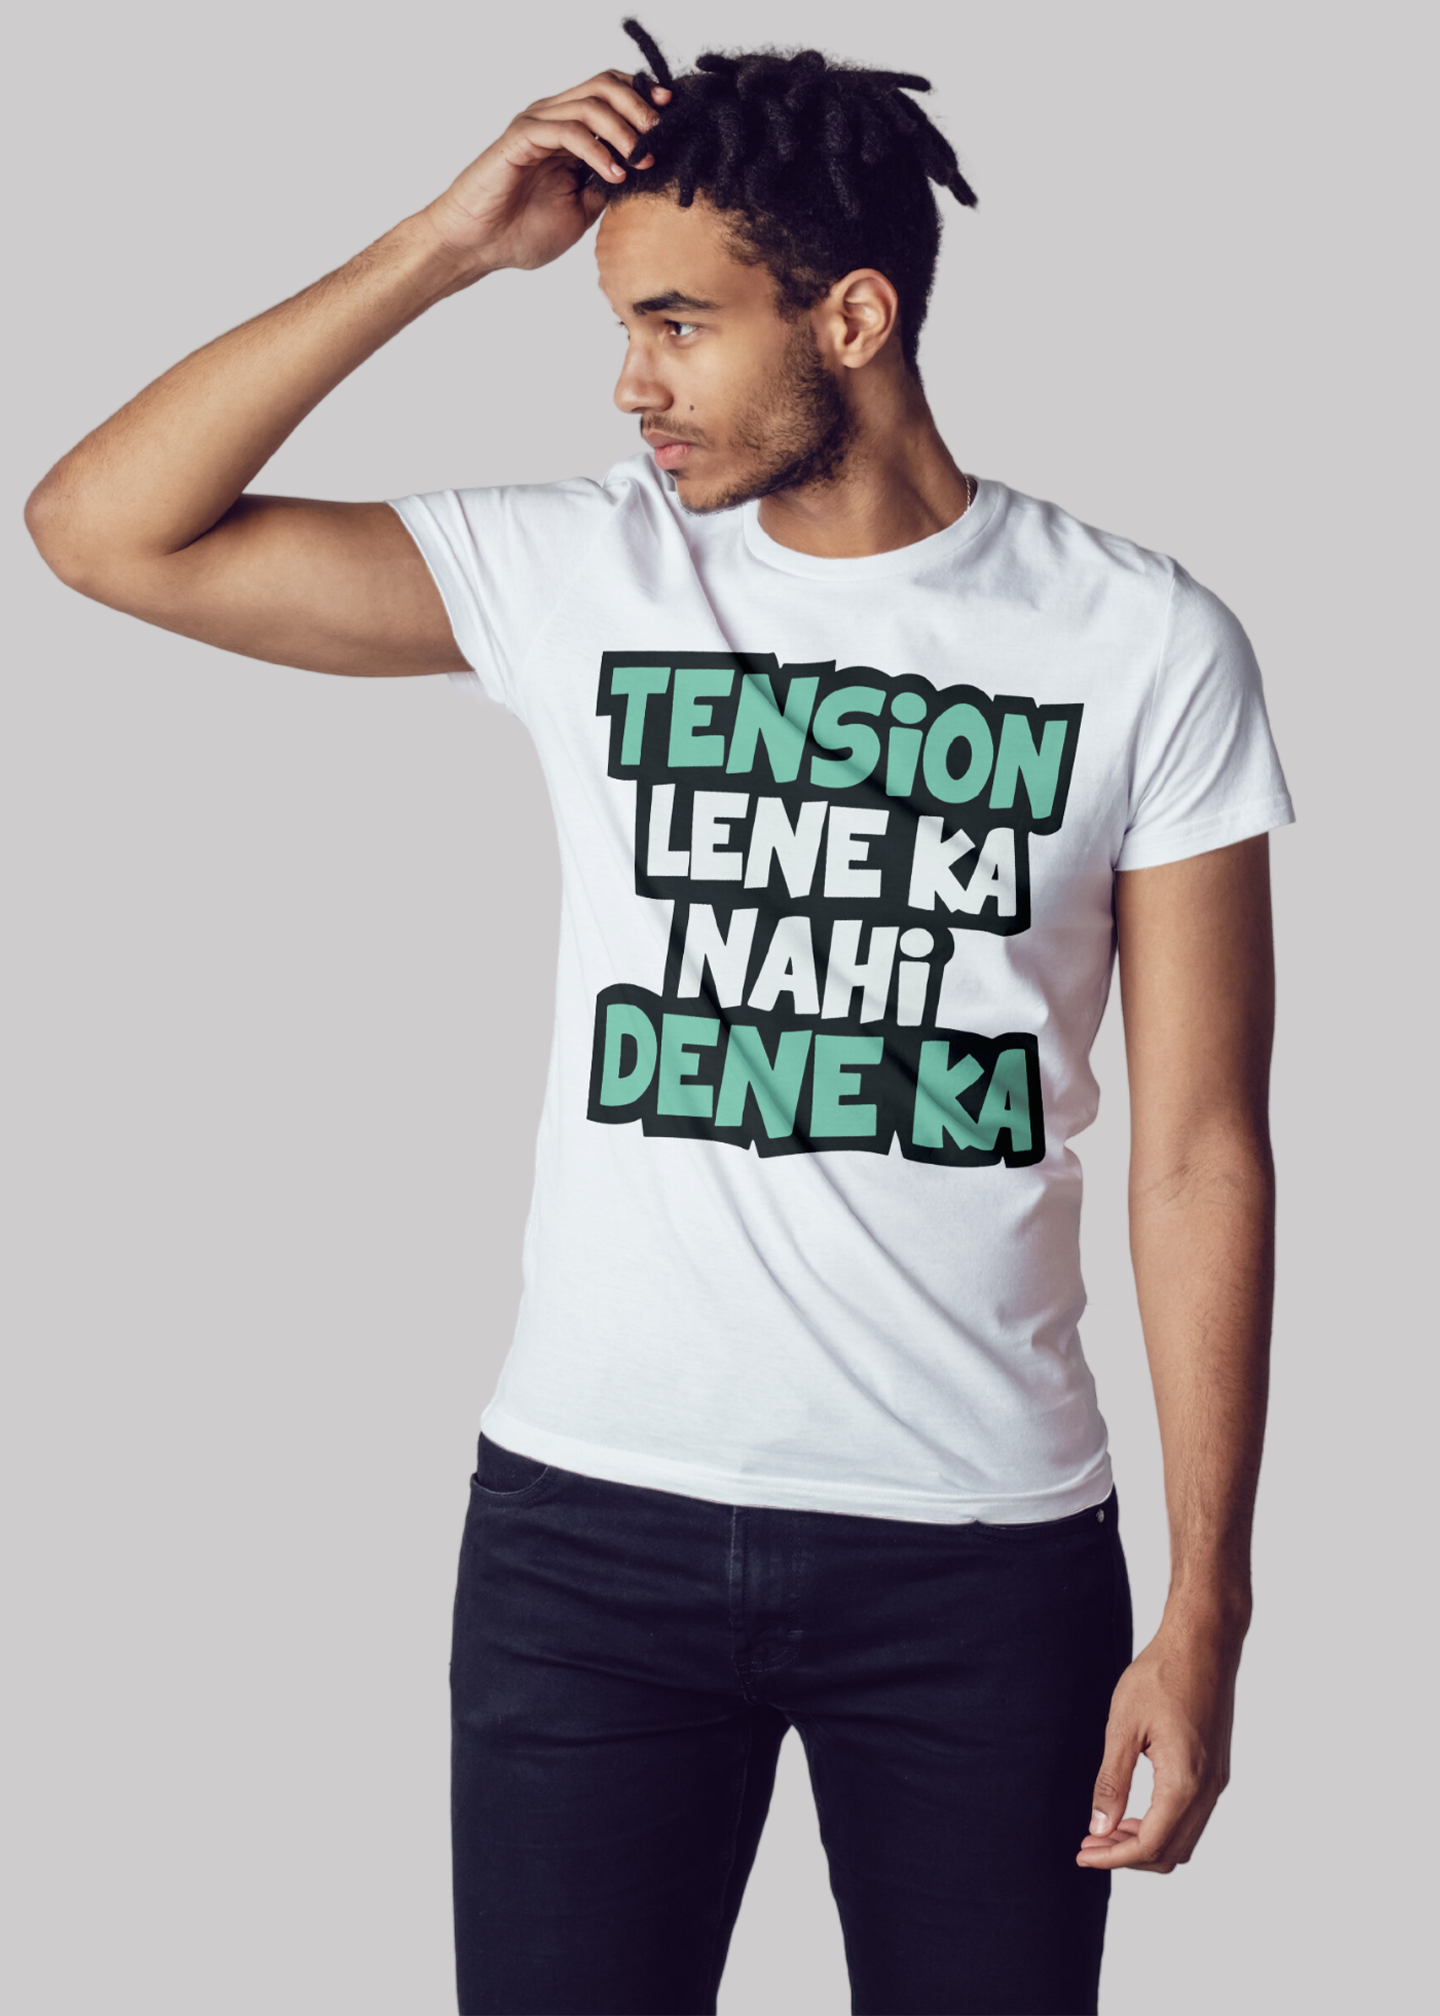 Tension lene ka nahi Printed Half Sleeve Premium Cotton T-shirt For Men